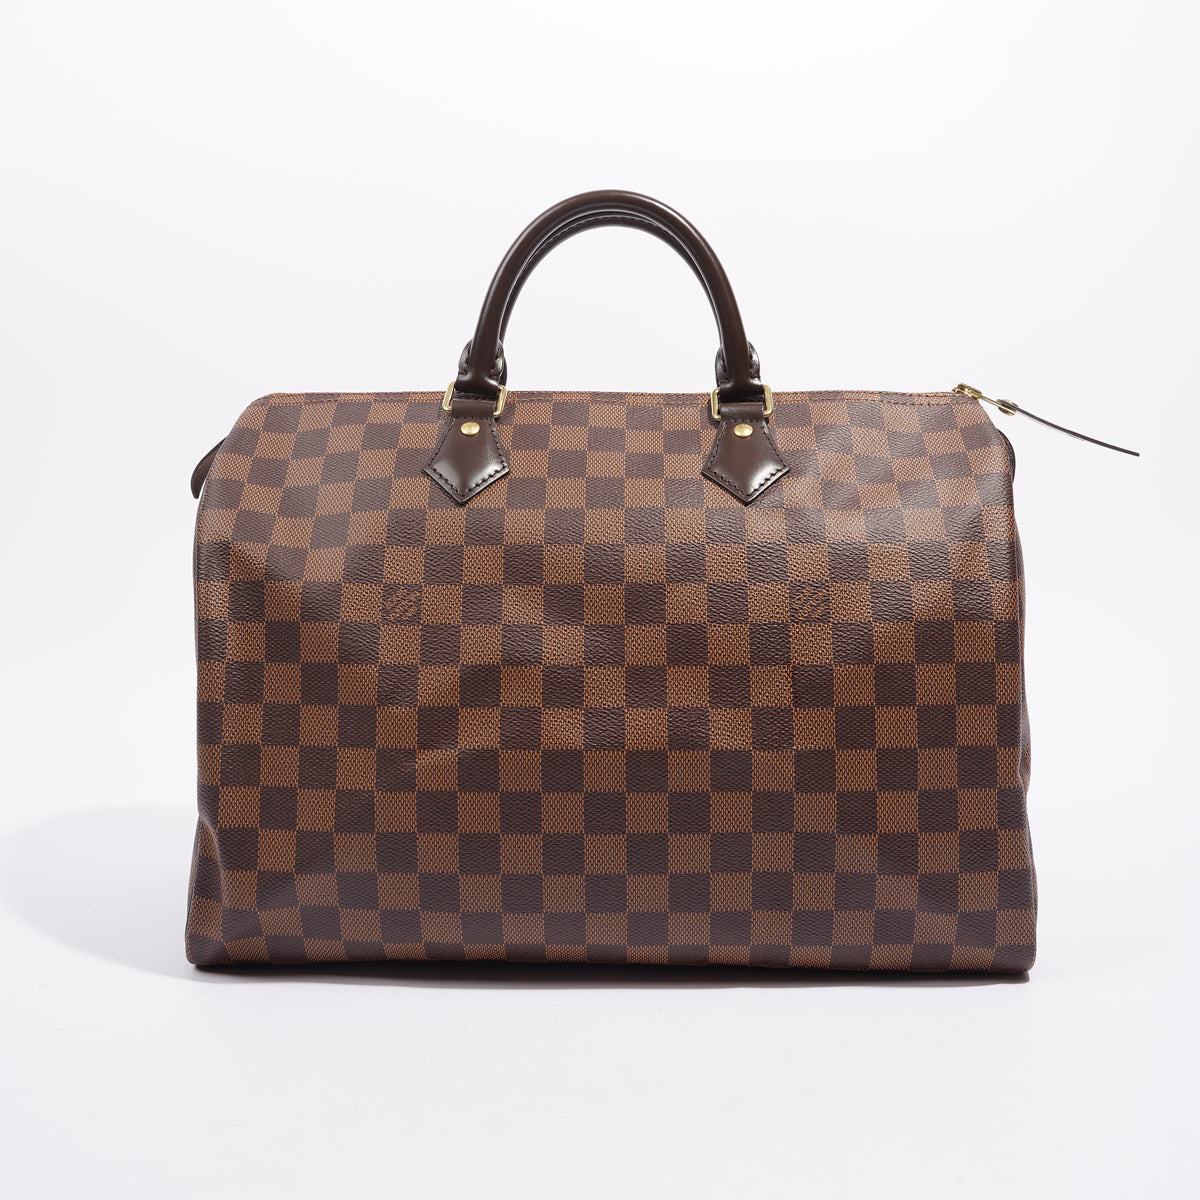 Louis Vuitton Damier Ebene Speedy 35 Bag